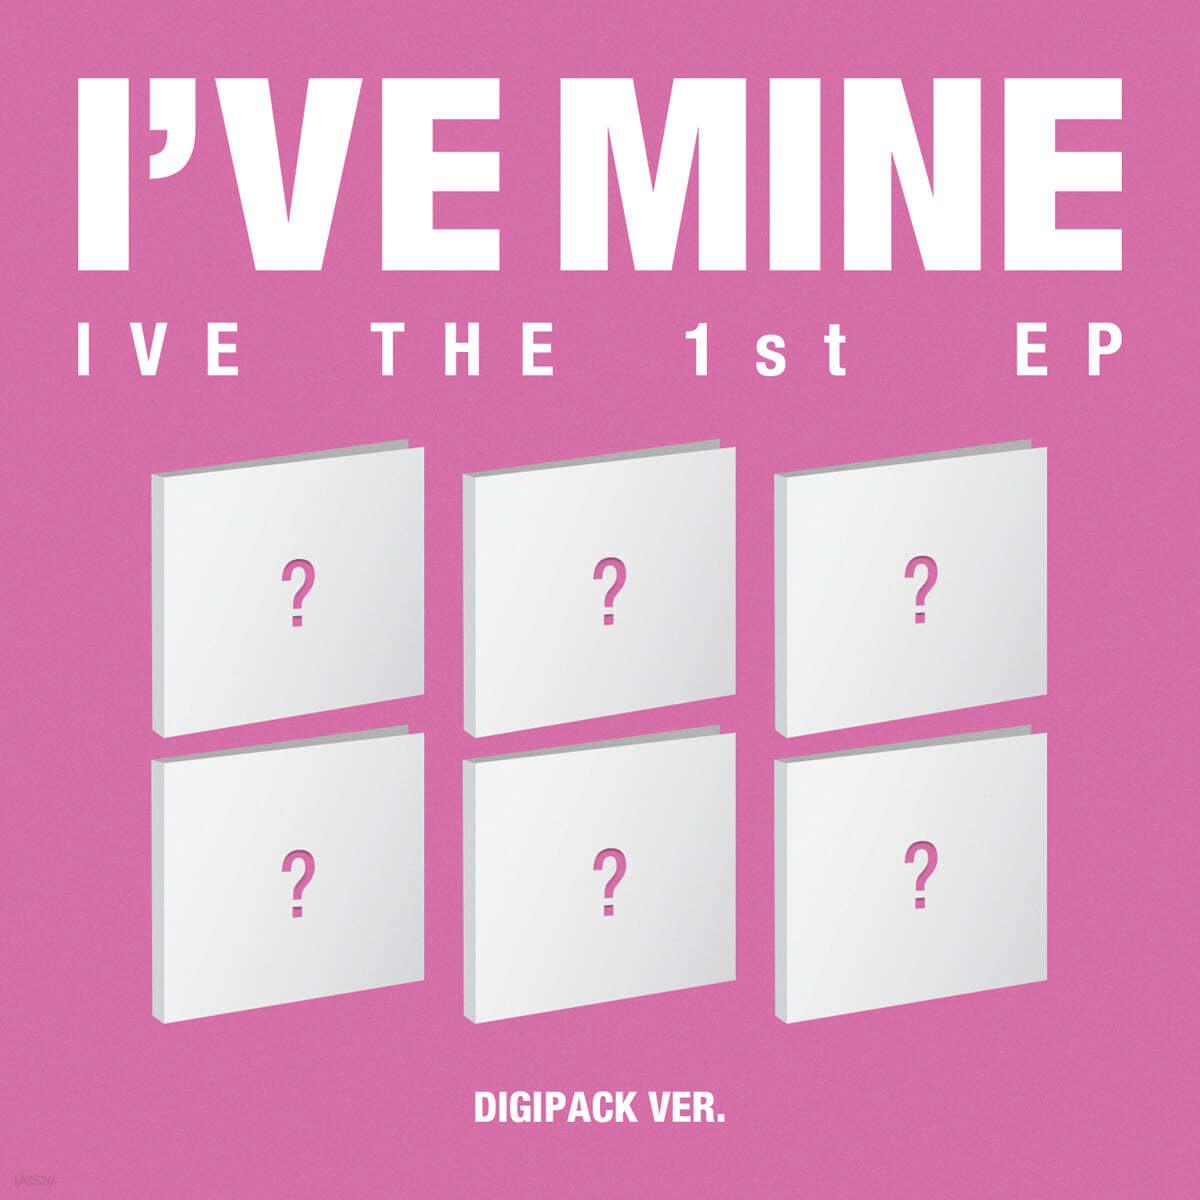 IVE 1st EP – I’VE MINE (Digipack Ver.)